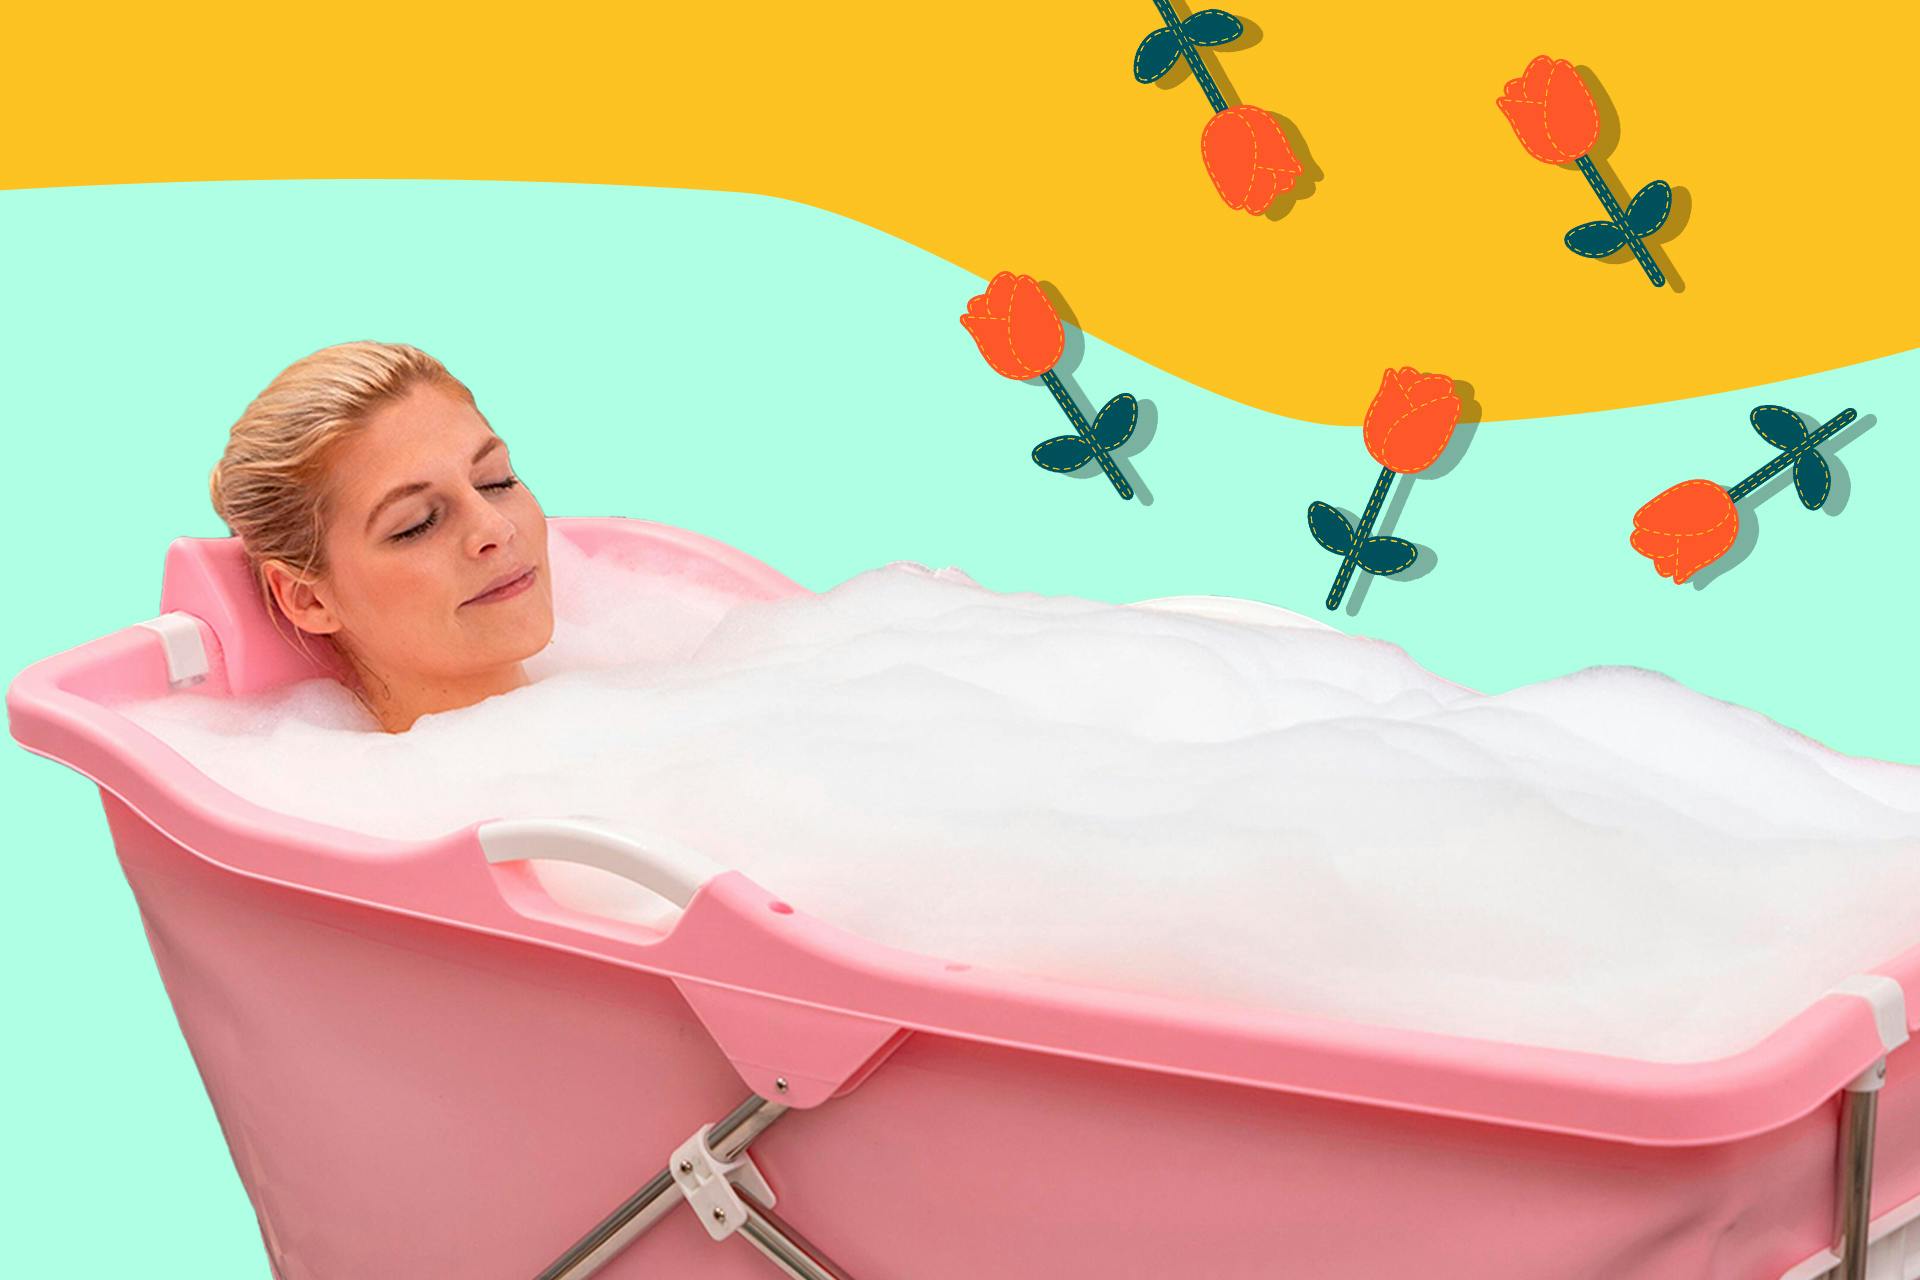 Avslappnad kvinna i ett skumbad i ett rosa vikbart badkar frÃ¥n Zenkuru 